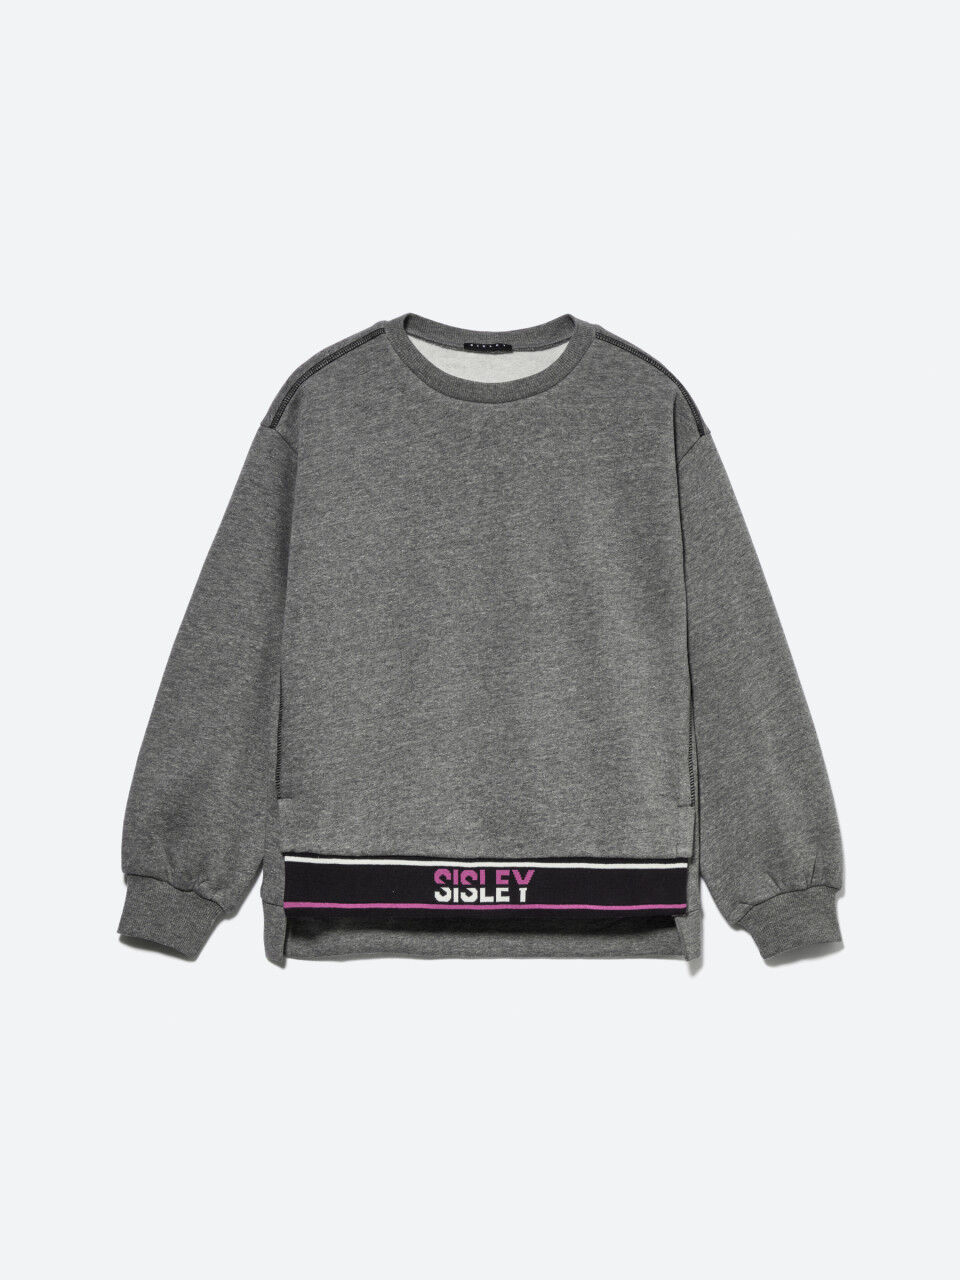 Pullover sweatshirt with logoed elastic